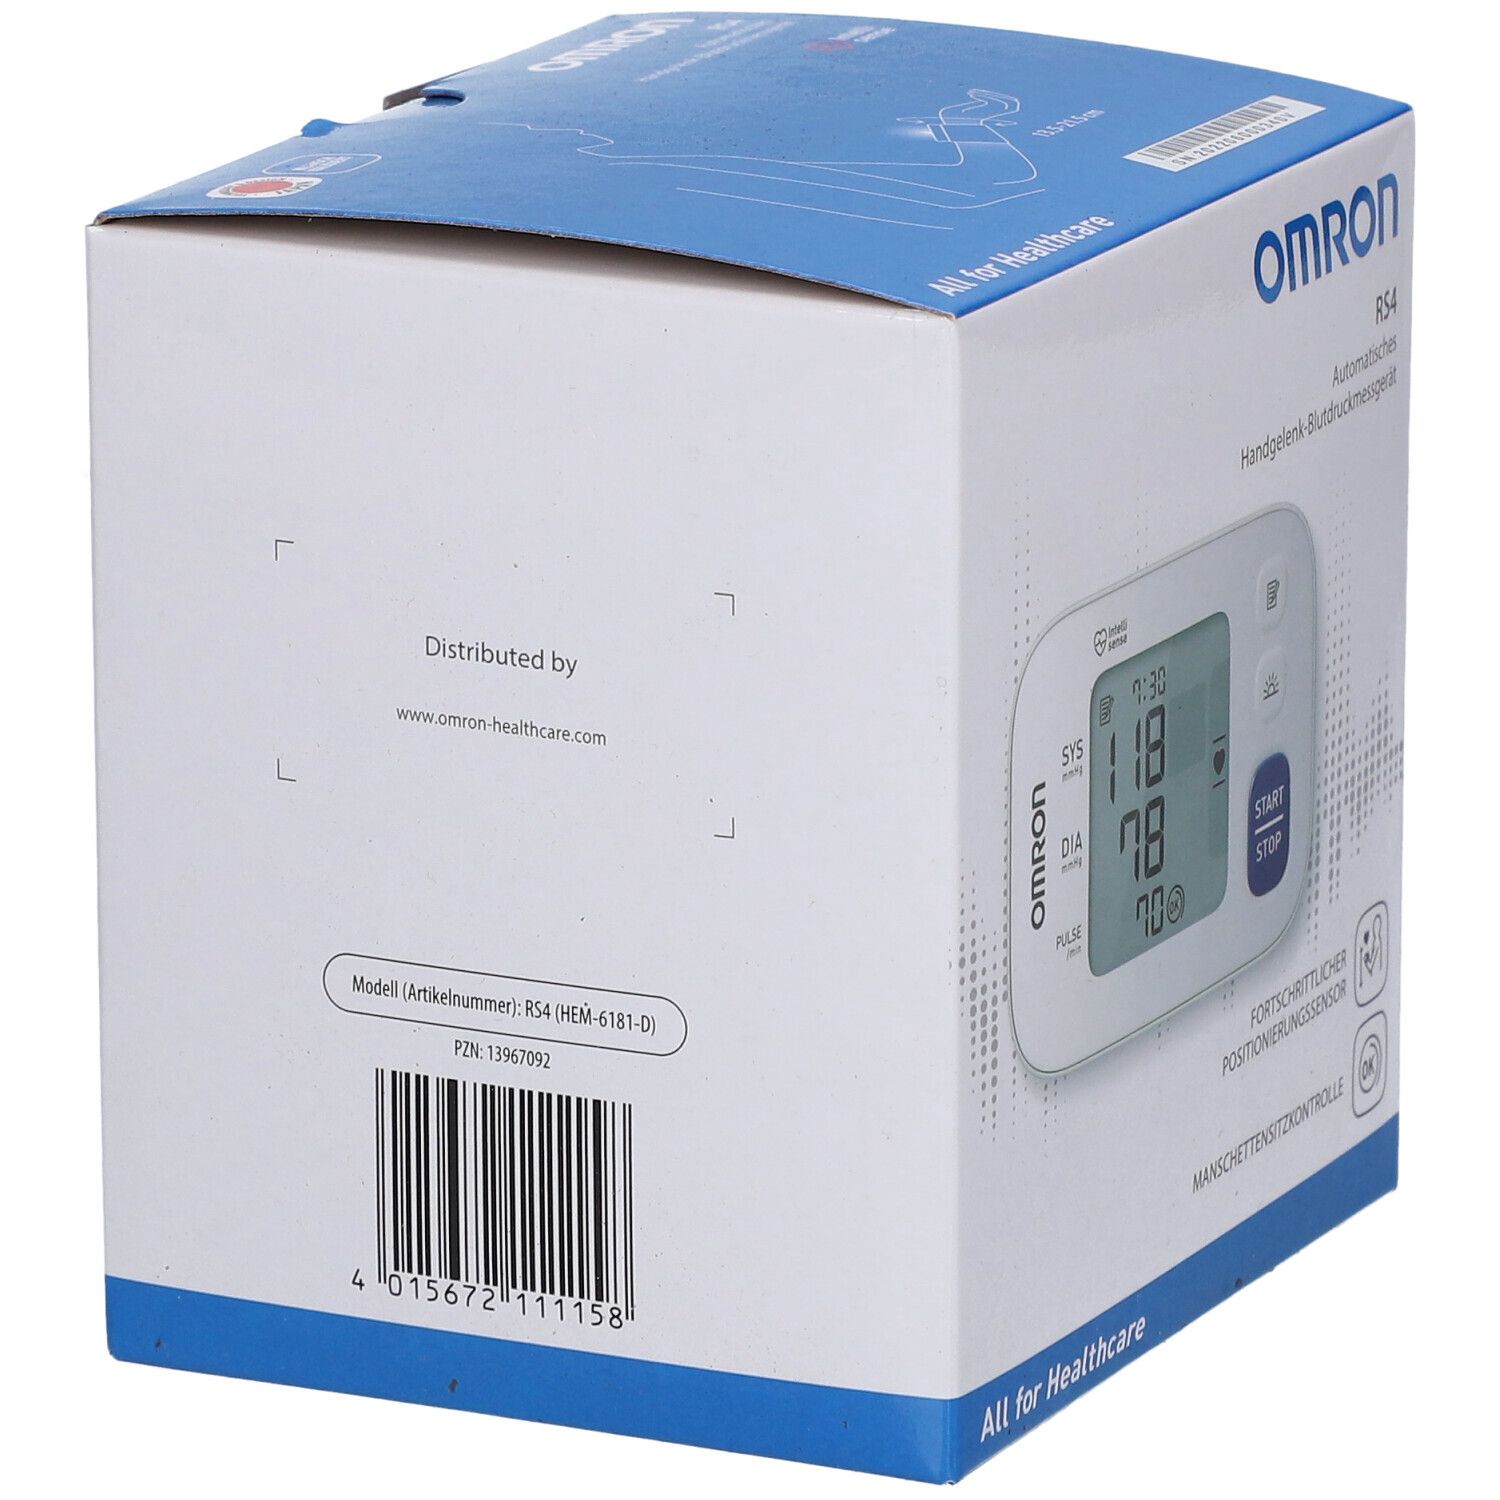 OMRON RS4 Handgelenk-Blutdruckmessgerät 1 St 